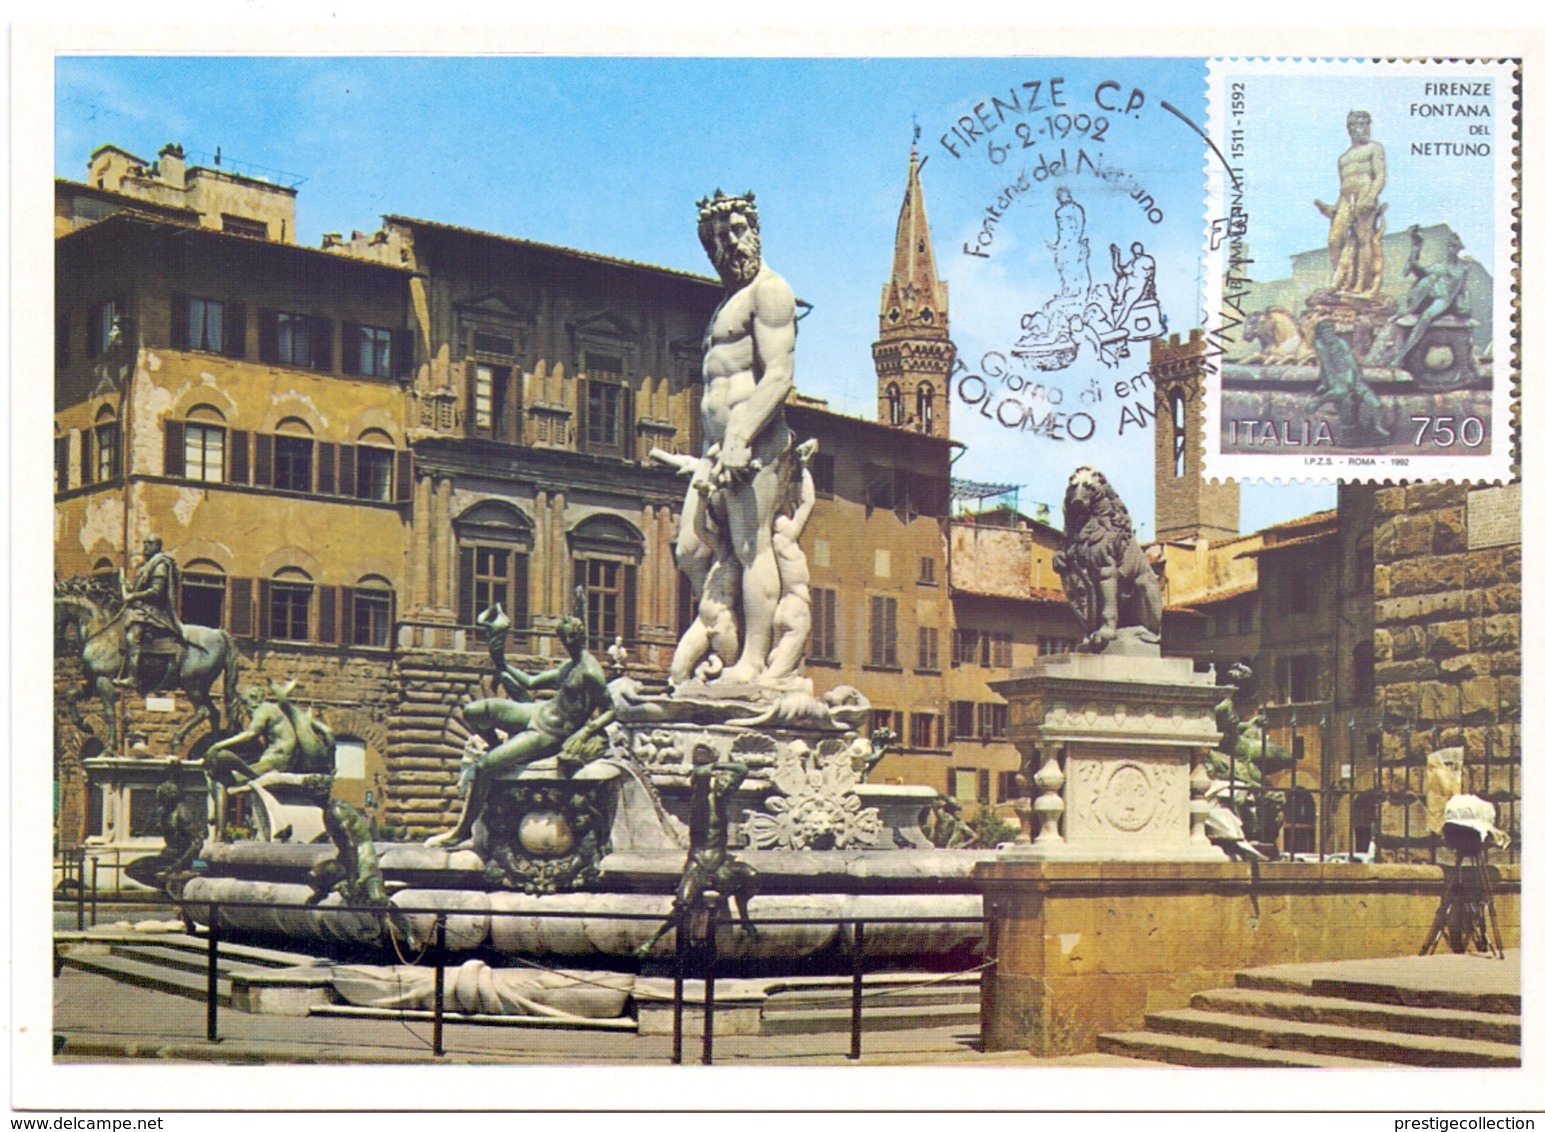 FIRENZE VASCA DEL NETTUNO AMMANNATI FDC   1992 MAXIMUM POST CARD (GENN200153) - Monumenti